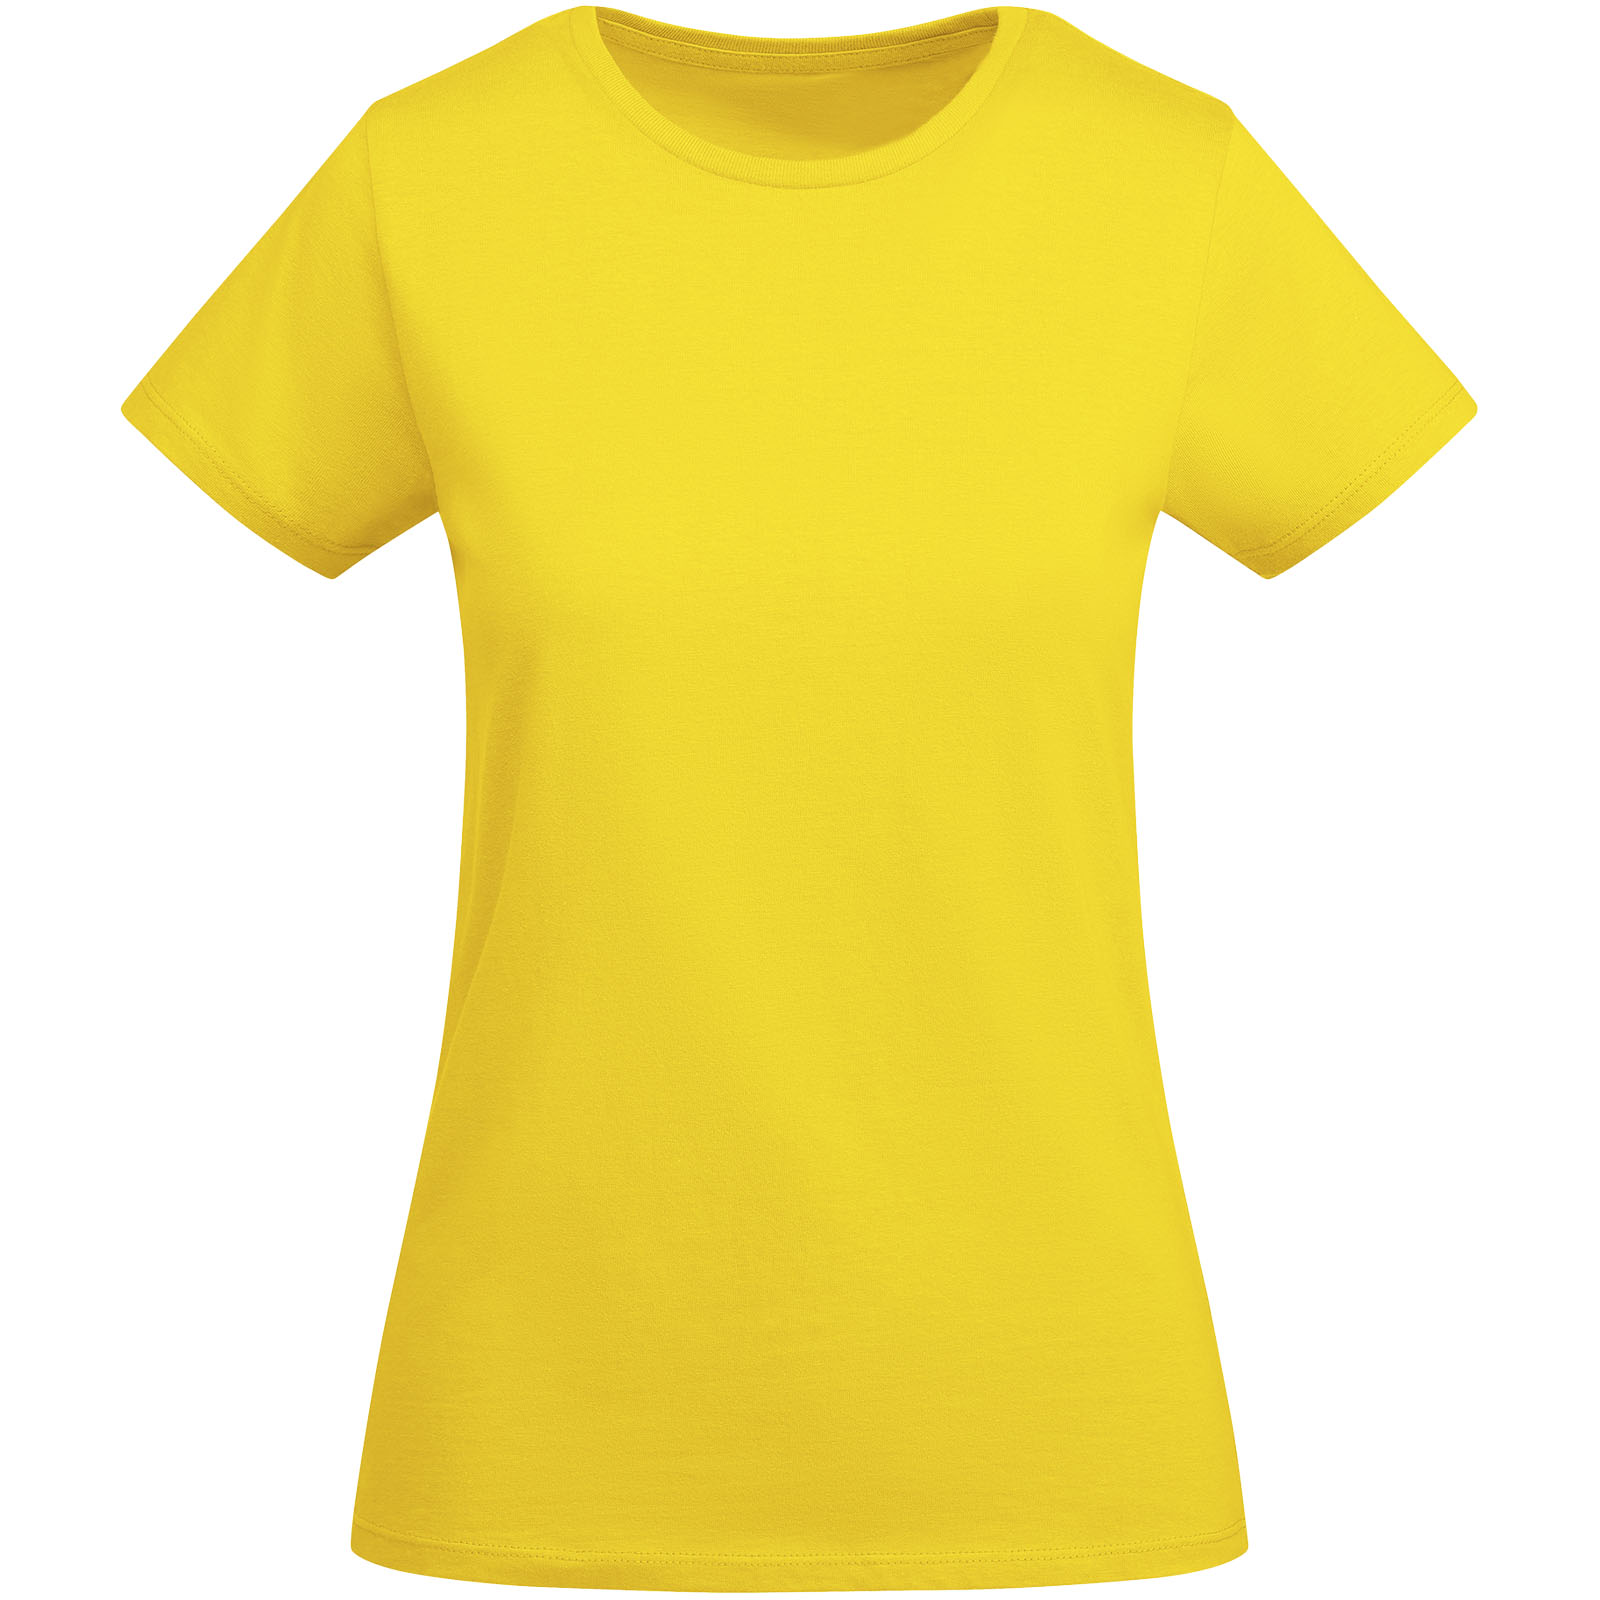 Advertising T-shirts - Breda short sleeve women's t-shirt